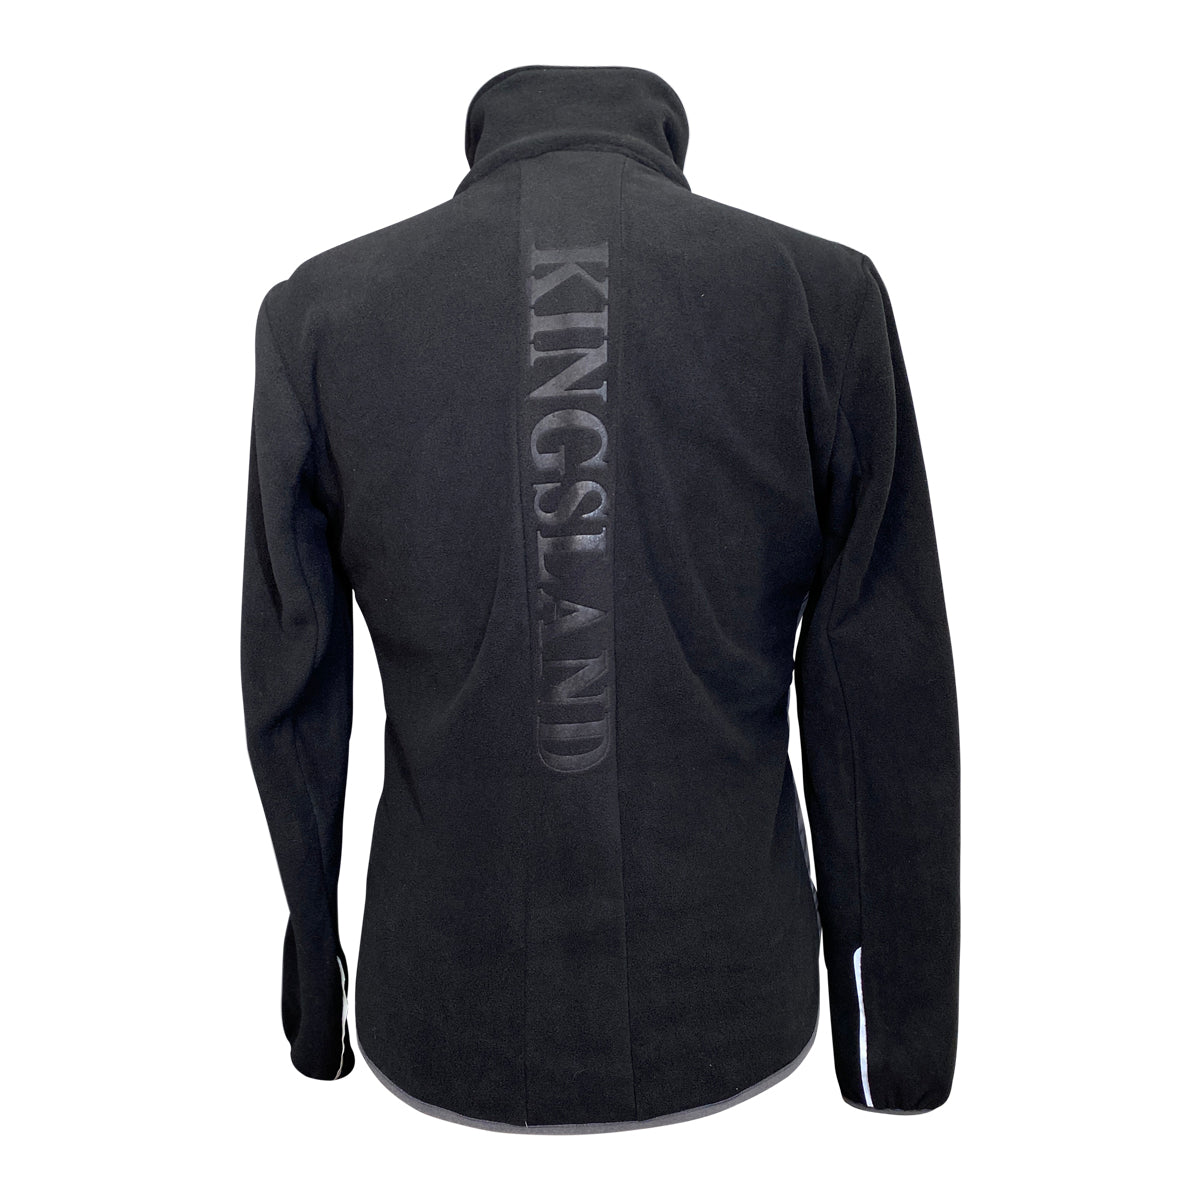 Kingsland 'Marwa' Jacket in Grey Asphalt